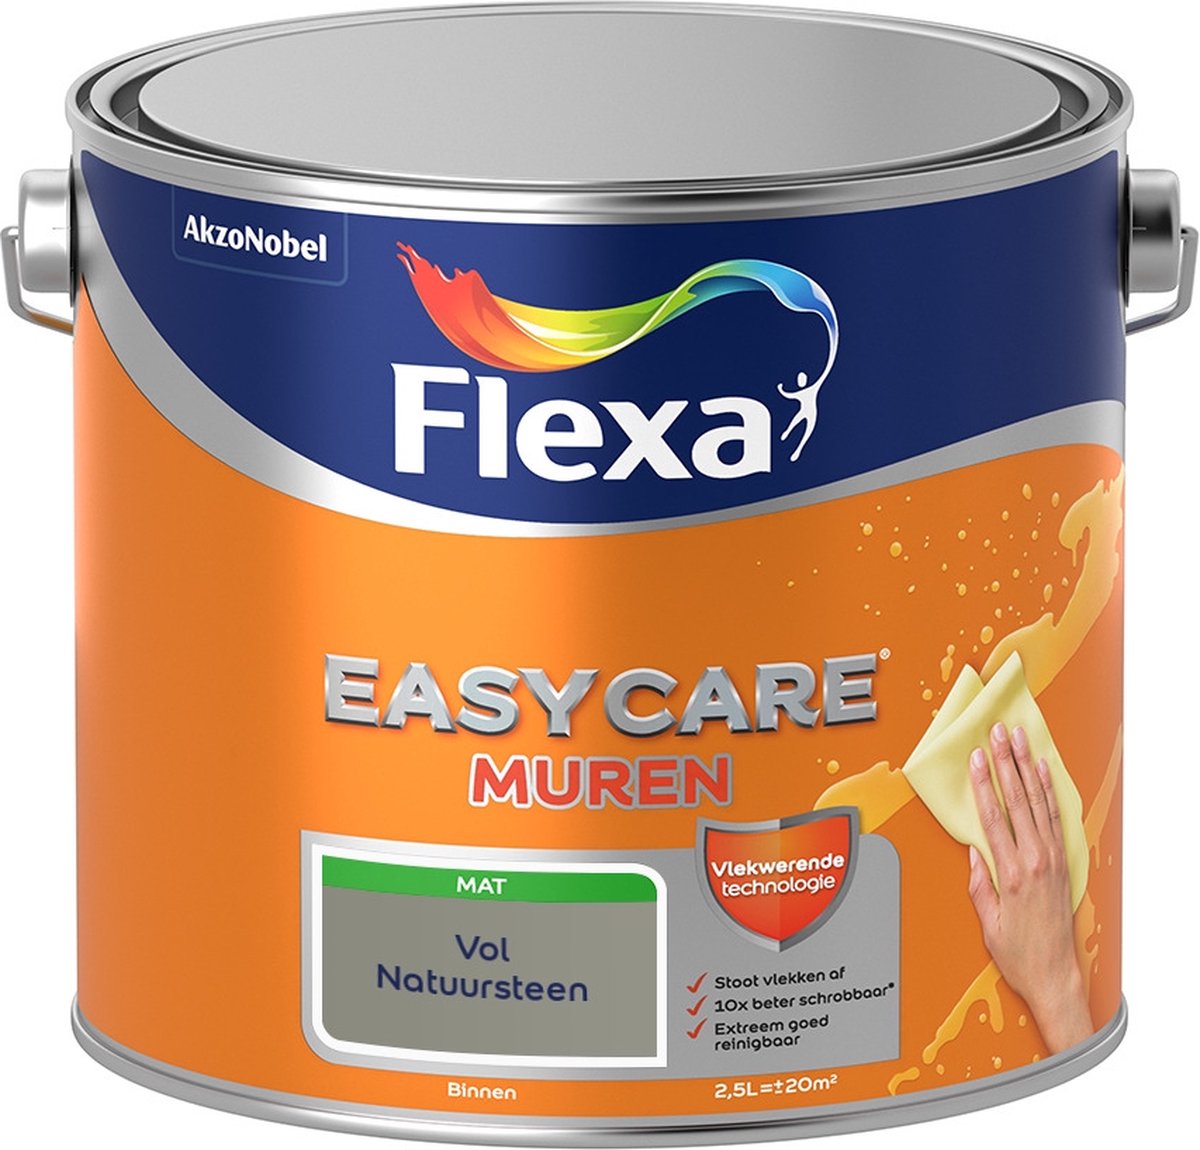 Flexa Easycare Muurverf - Mat - Mengkleur - Vol Natuursteen - 2,5 liter